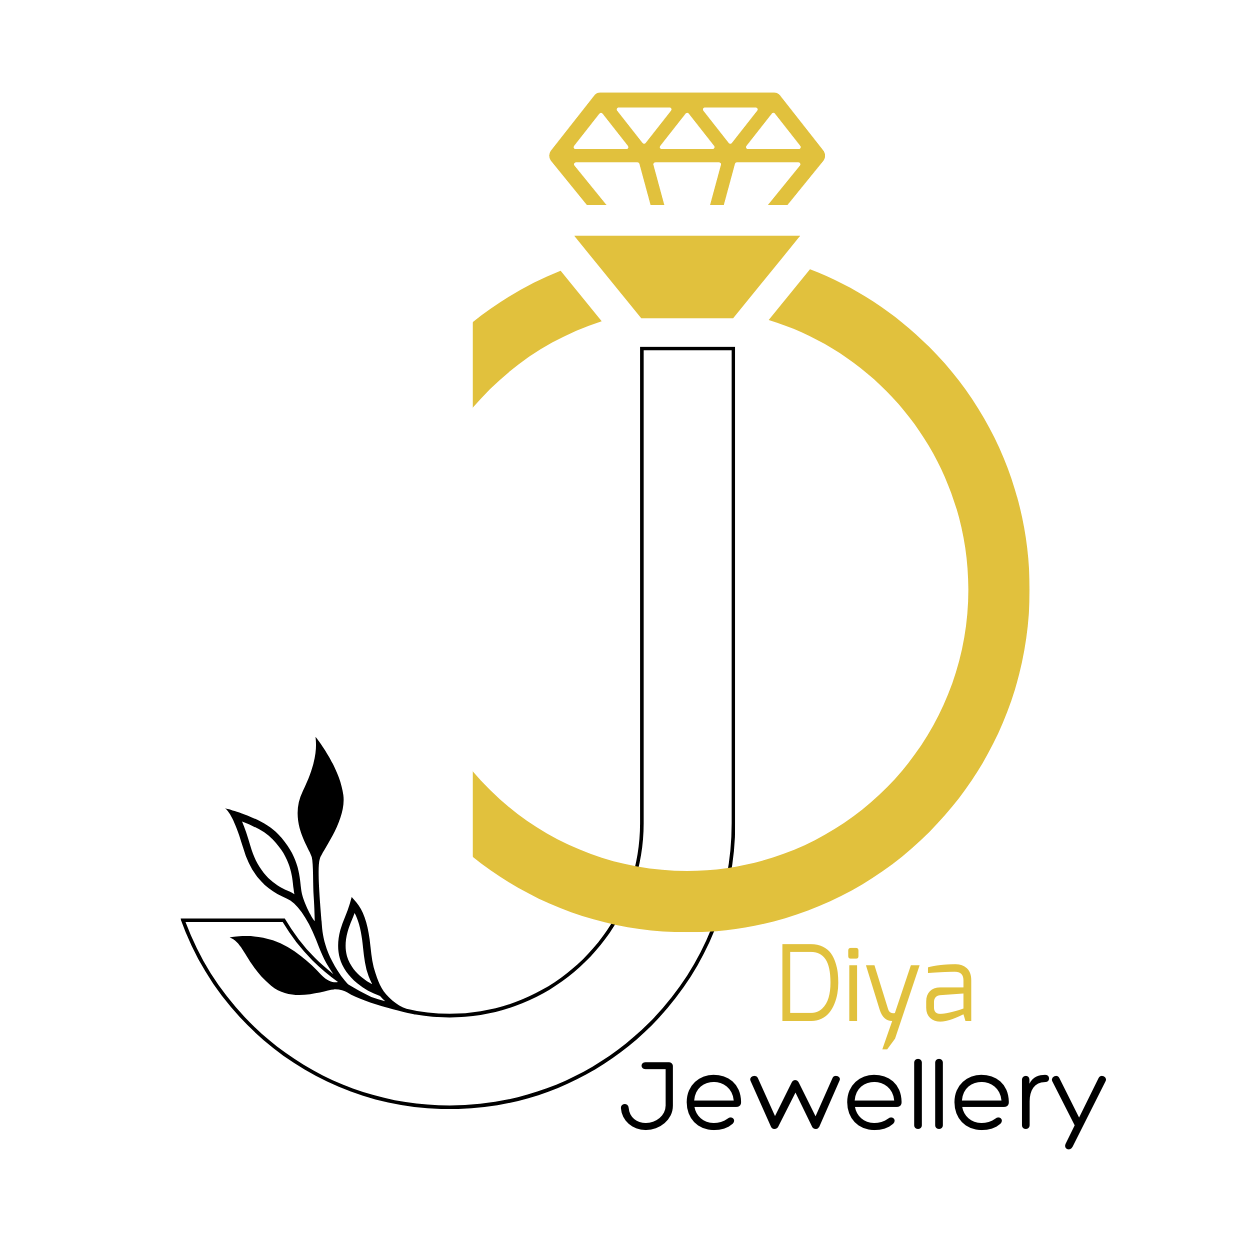 Happy Diwali Hindu Festival Icons Elements Logo Set Burning Diya  Illustration Light Festival Of India Stock Illustration - Download Image  Now - iStock